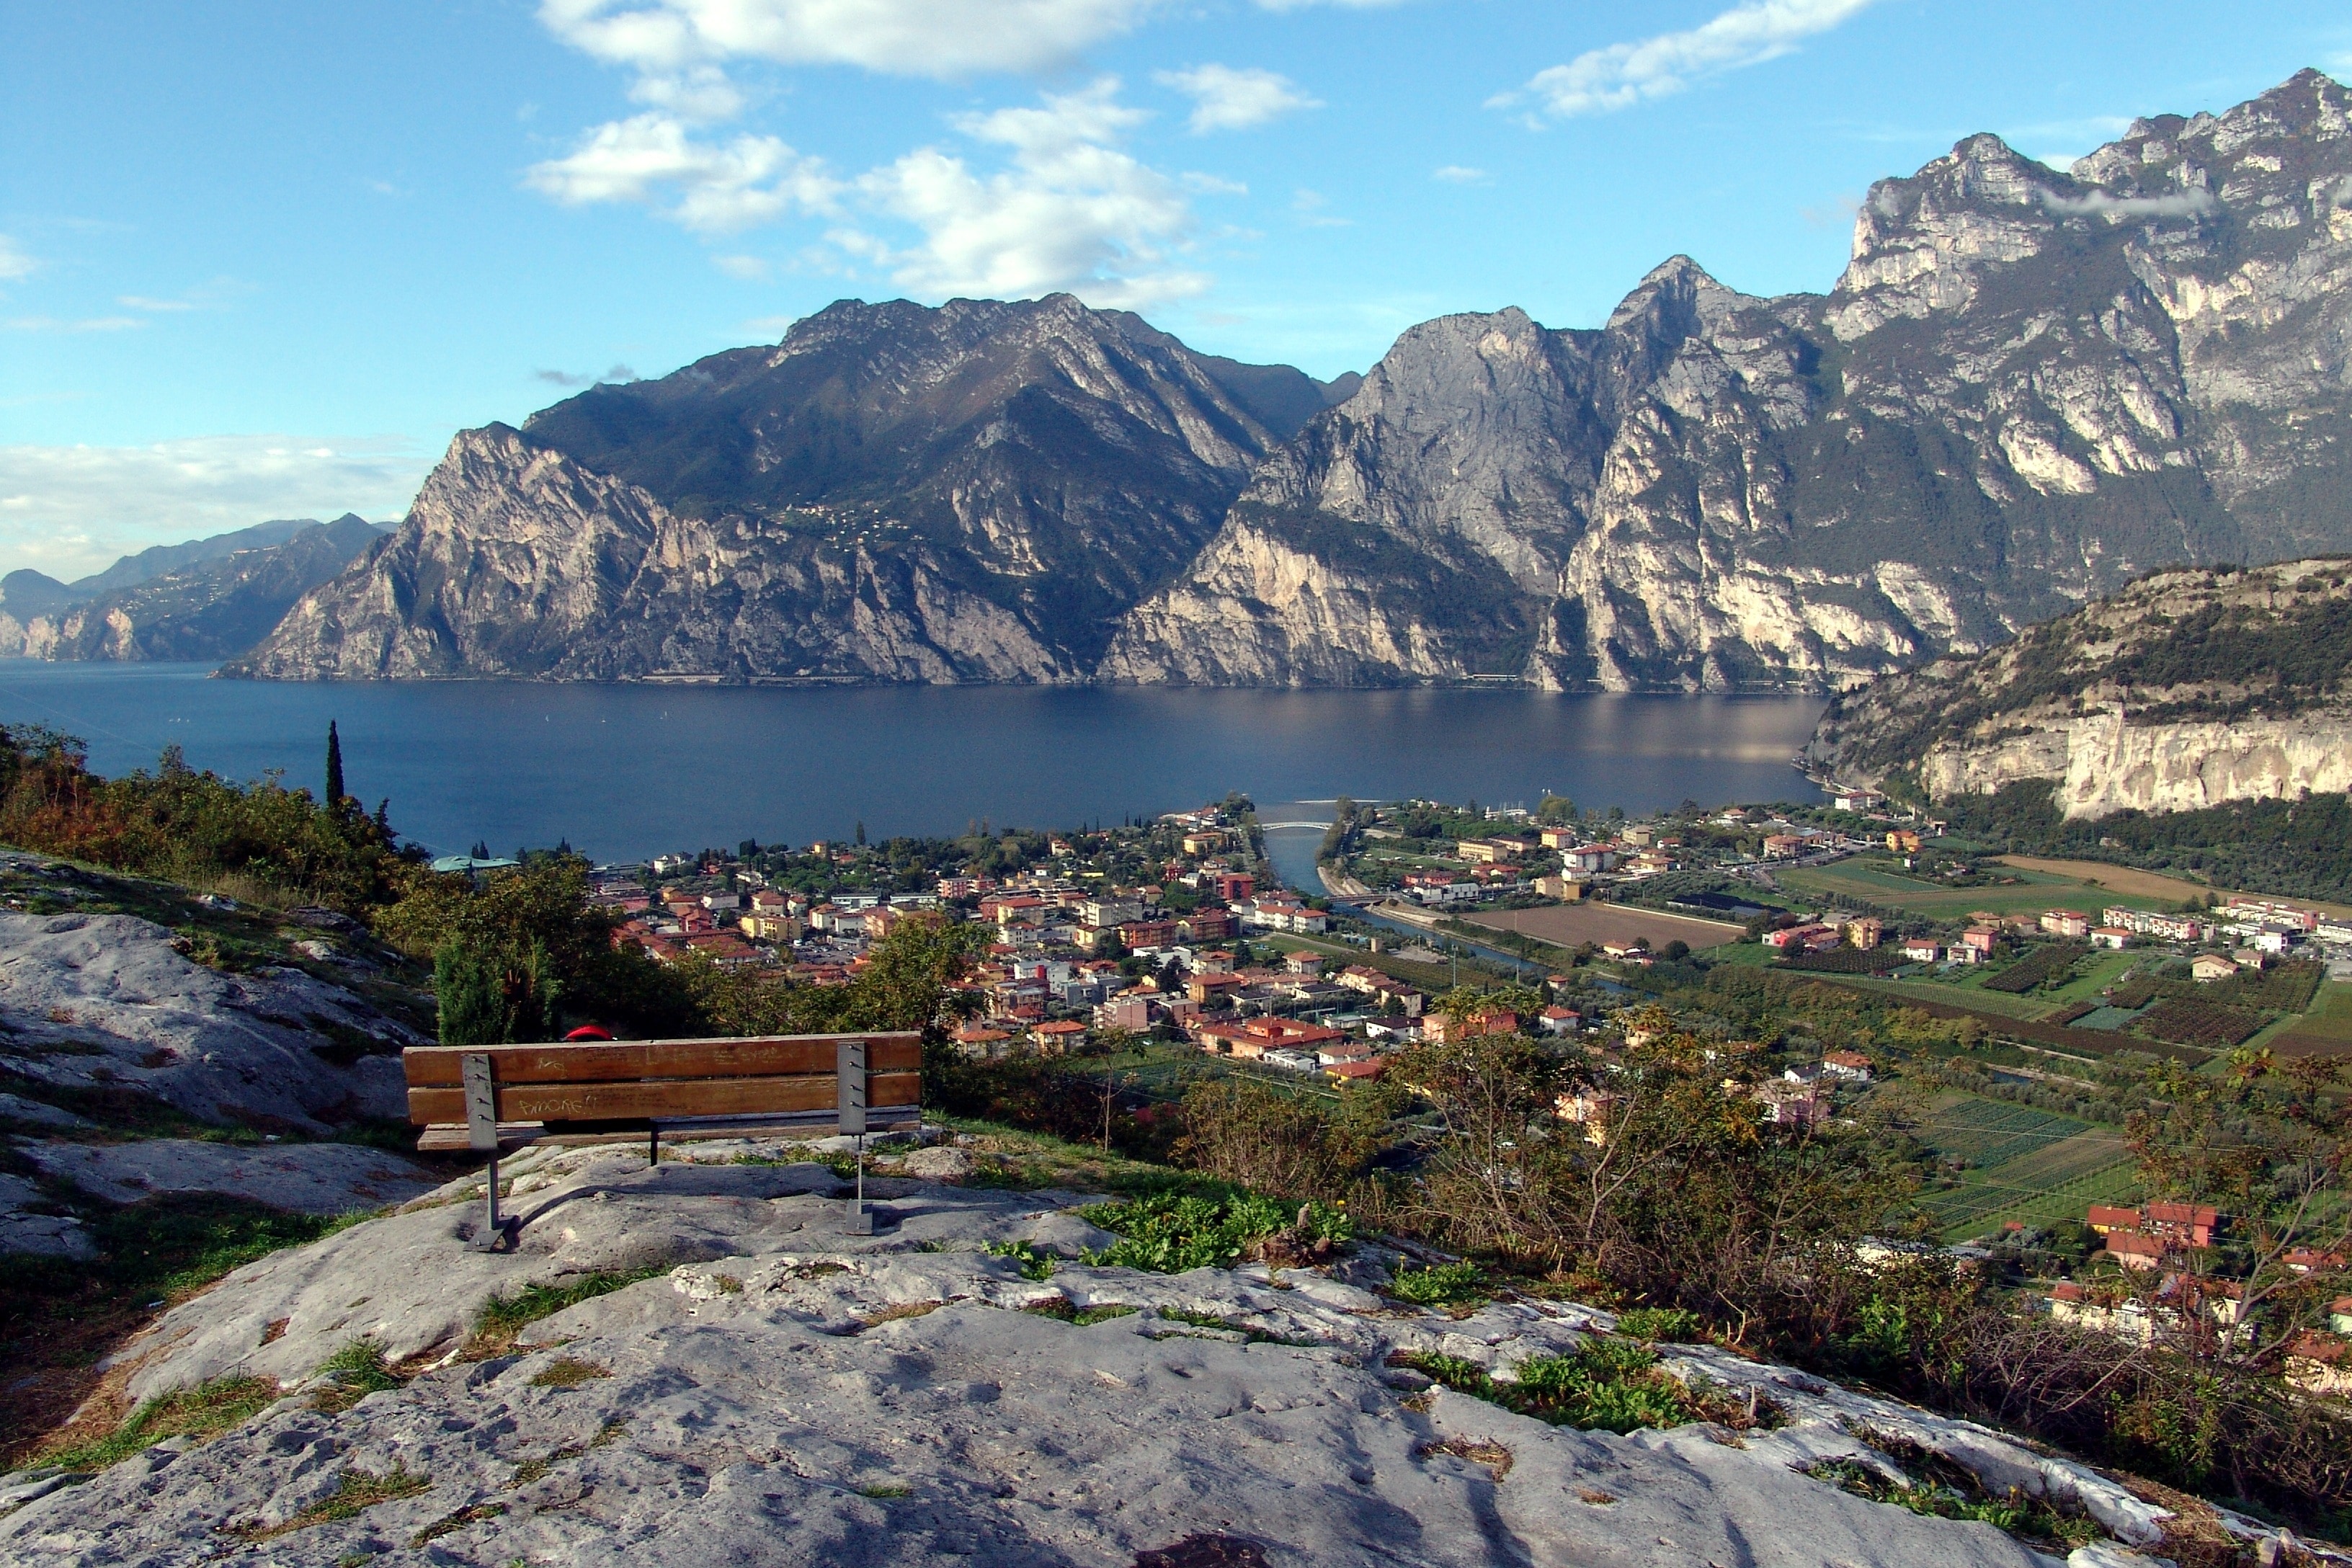 Bank, Panorama, Garda, Landscape, Rest, mountain, travel destinations